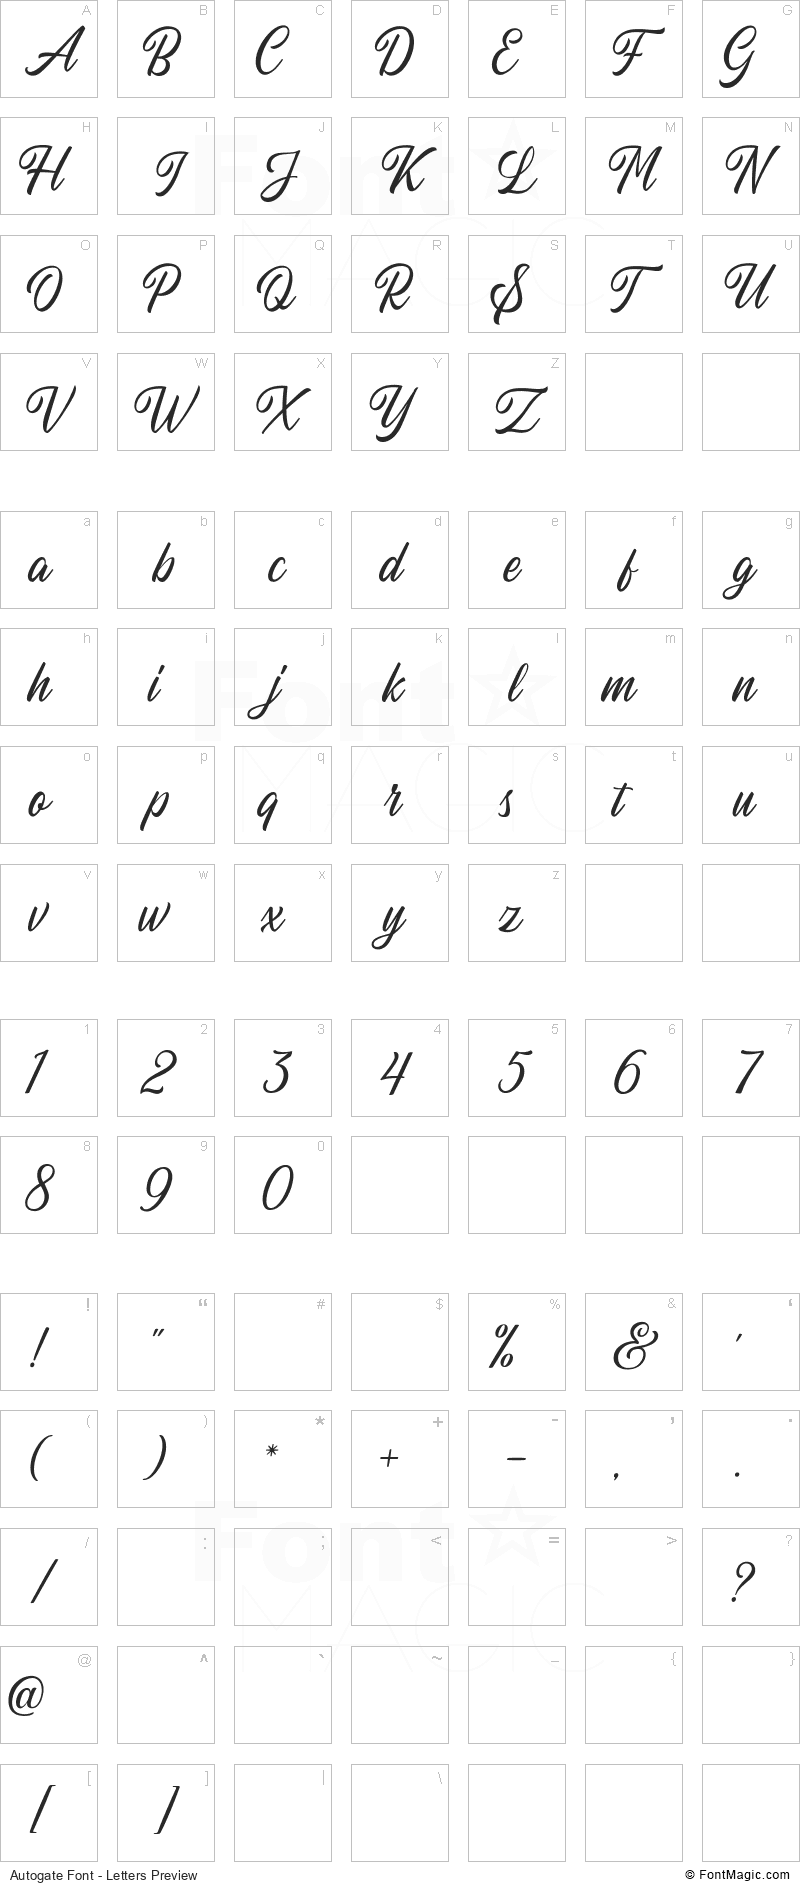 Autogate Font - All Latters Preview Chart